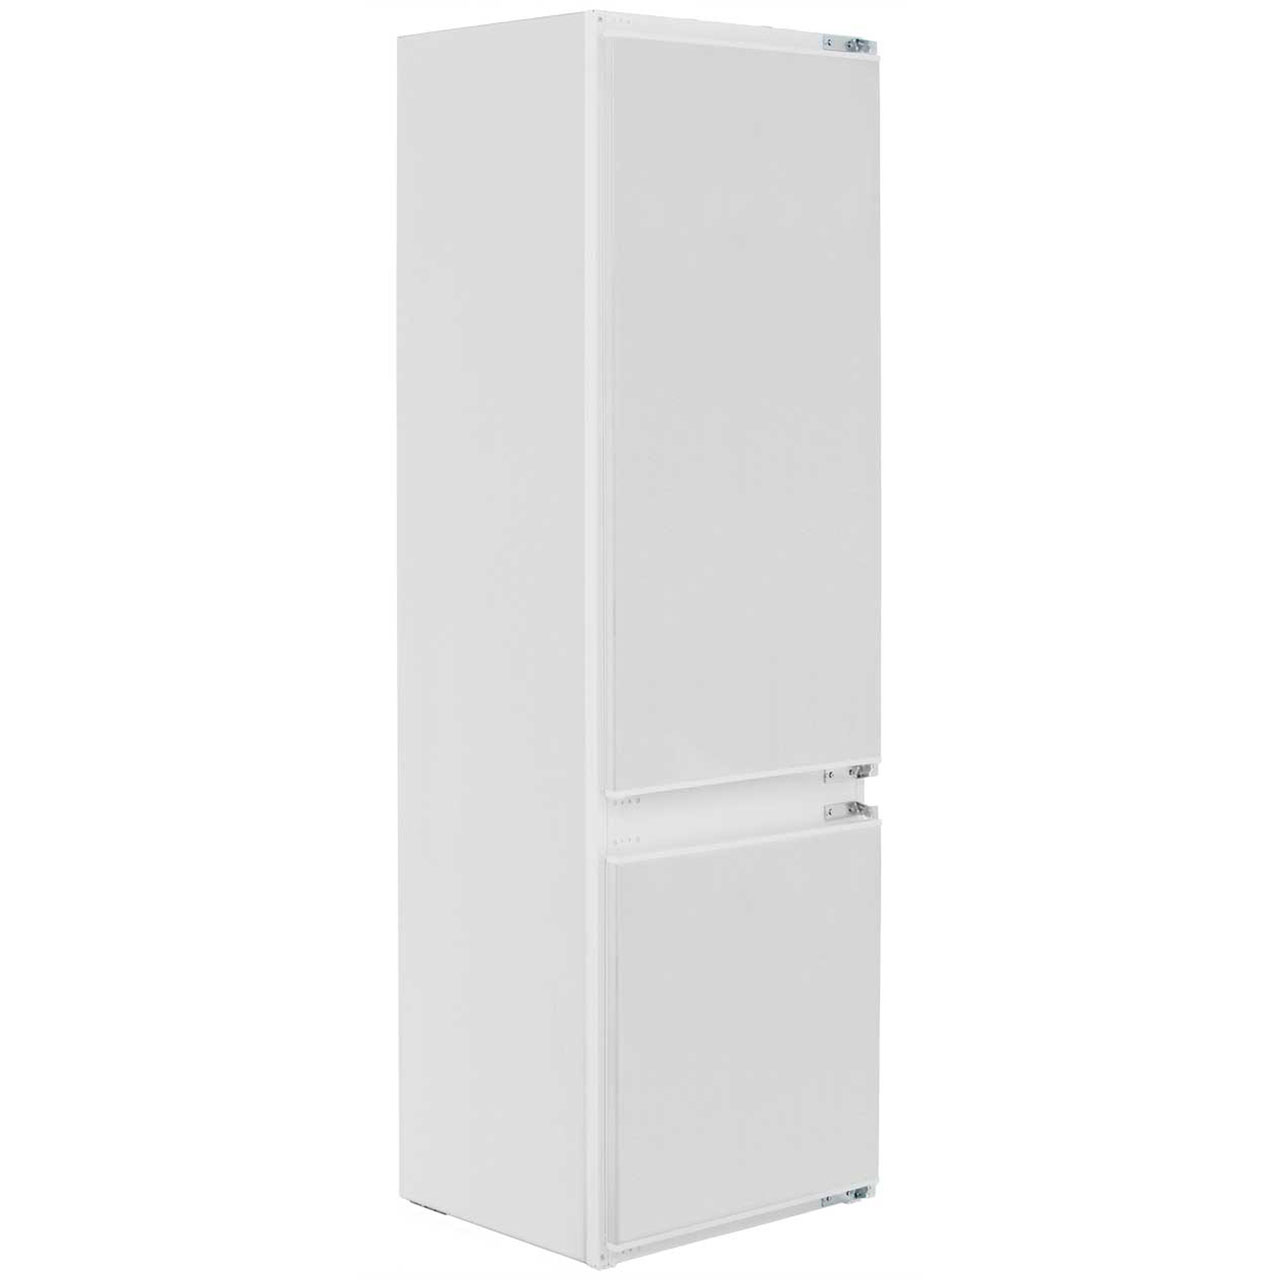 NEFF K8524X8GB N30 A+ 54cm Built In Fridge Freezer 70/30 Standard White 4242004172277 | eBay